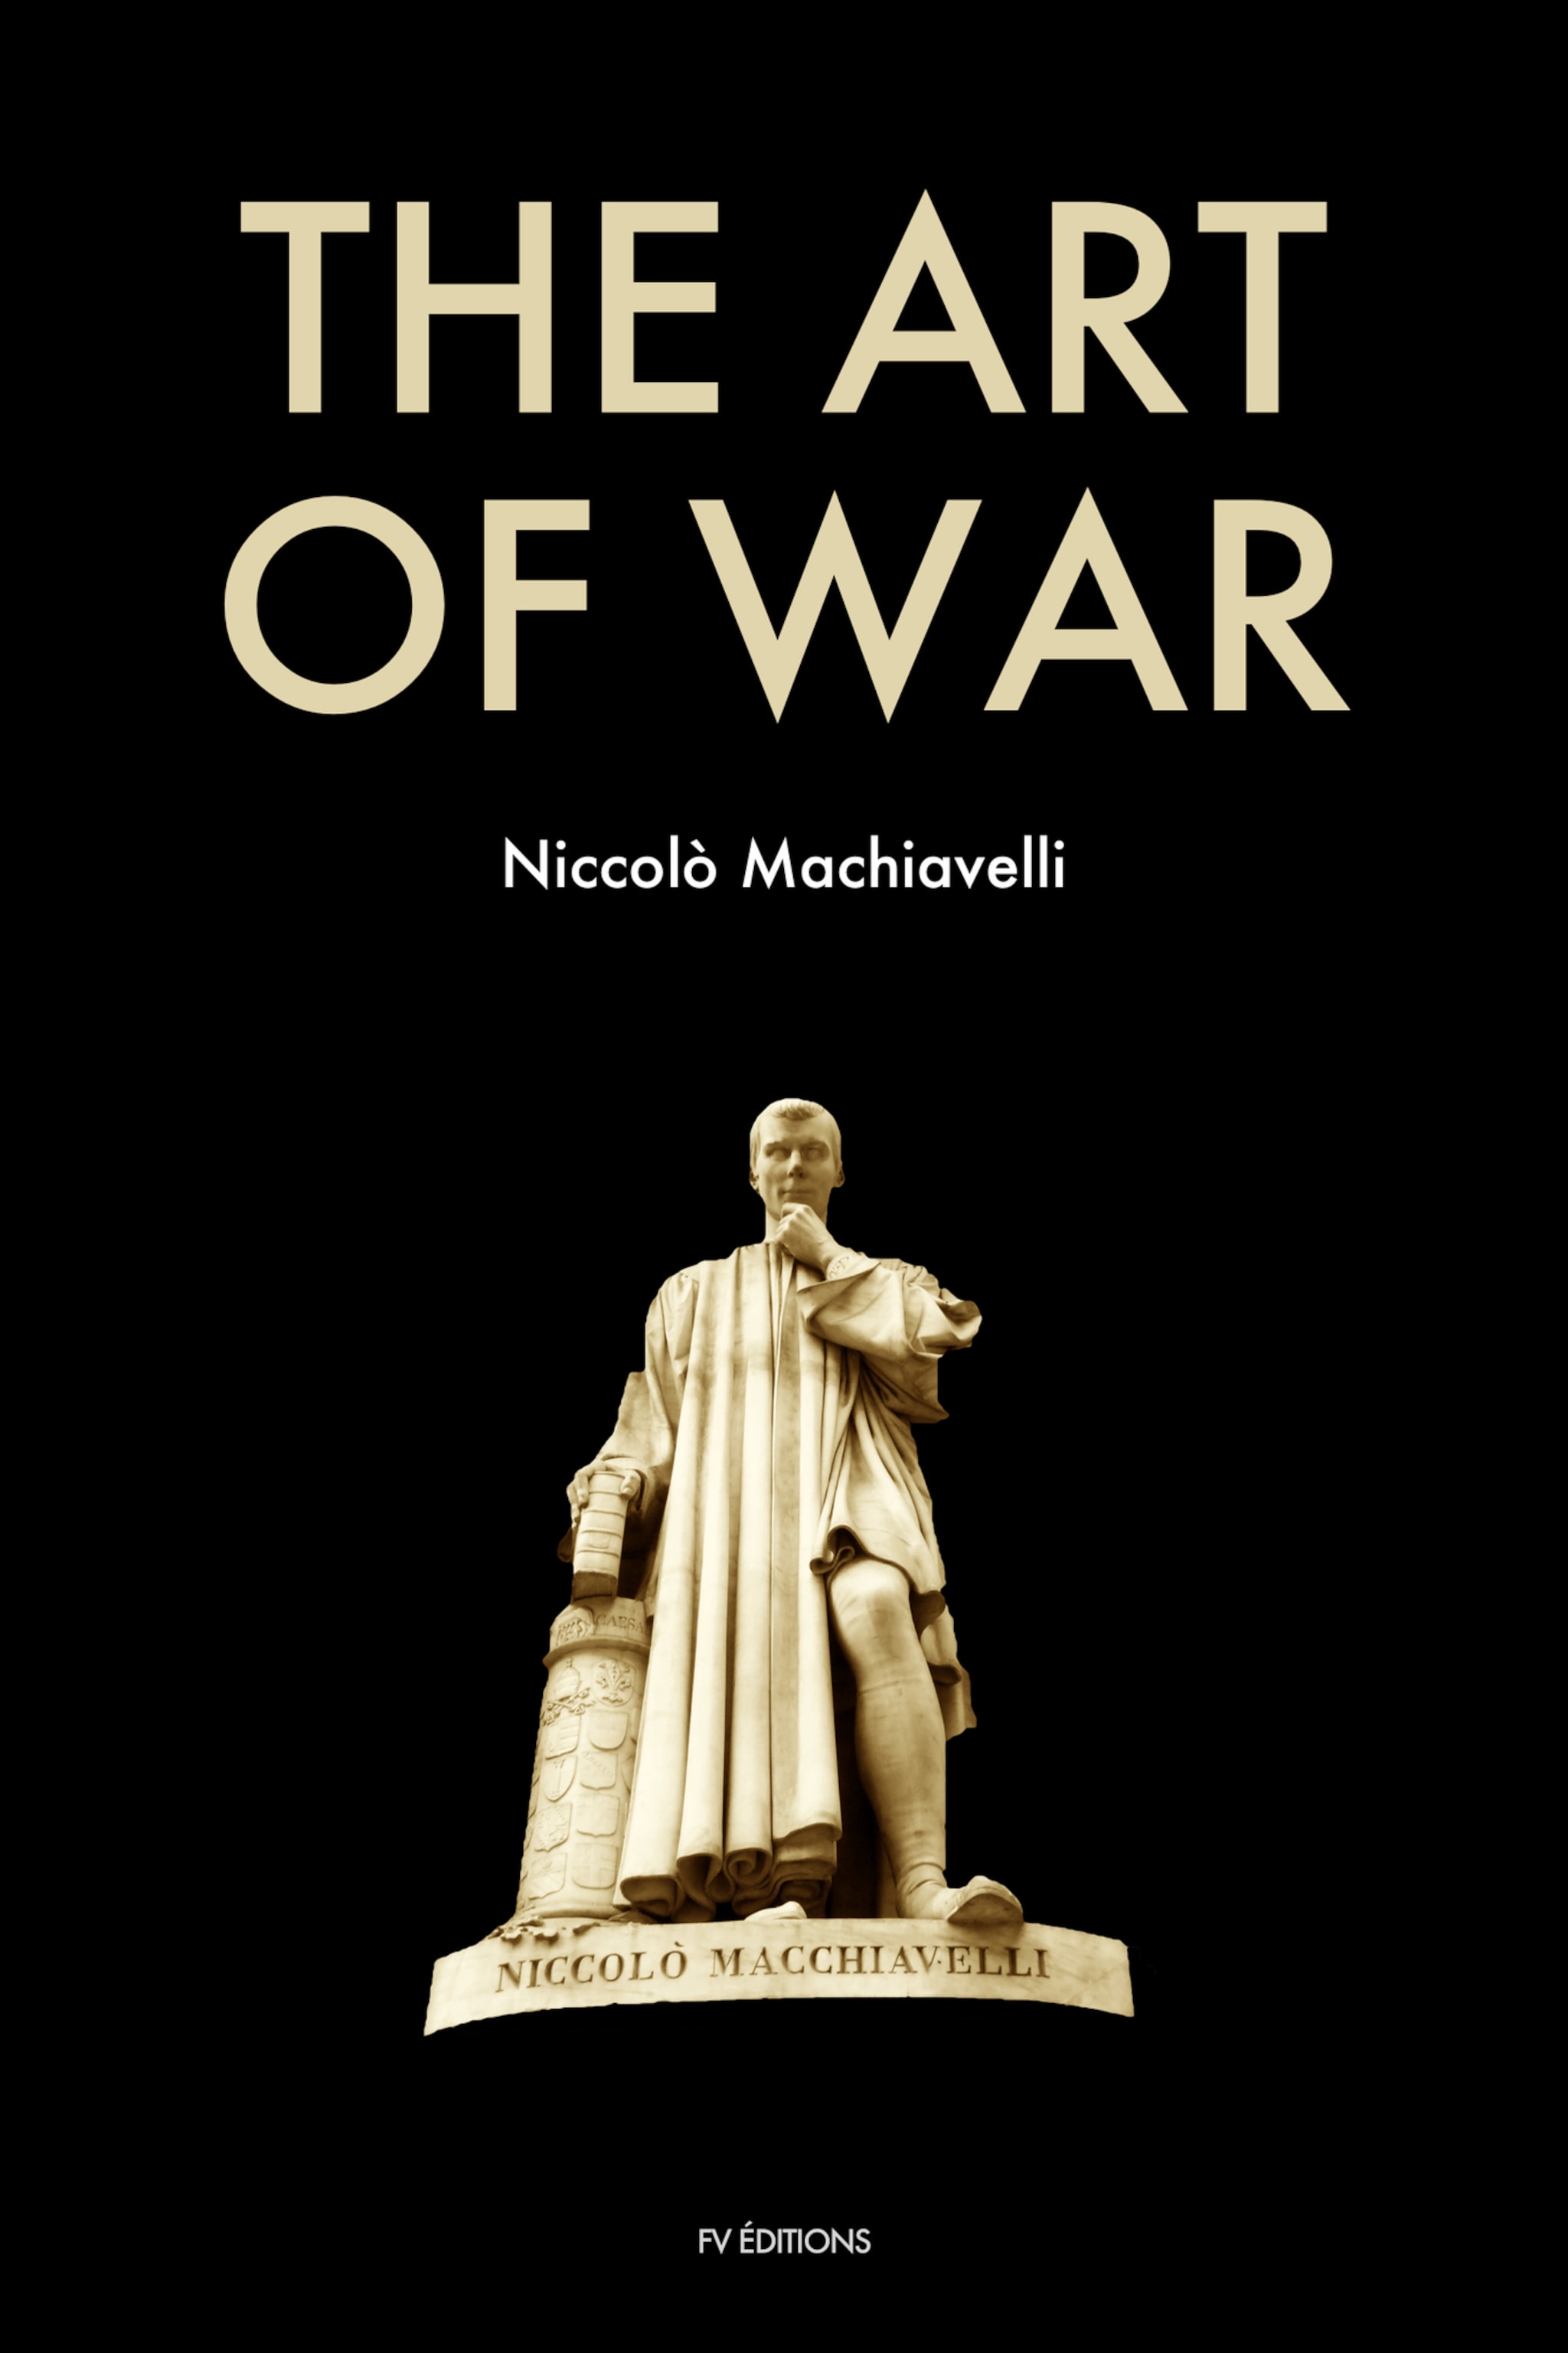 niccolo machiavelli the art of war book